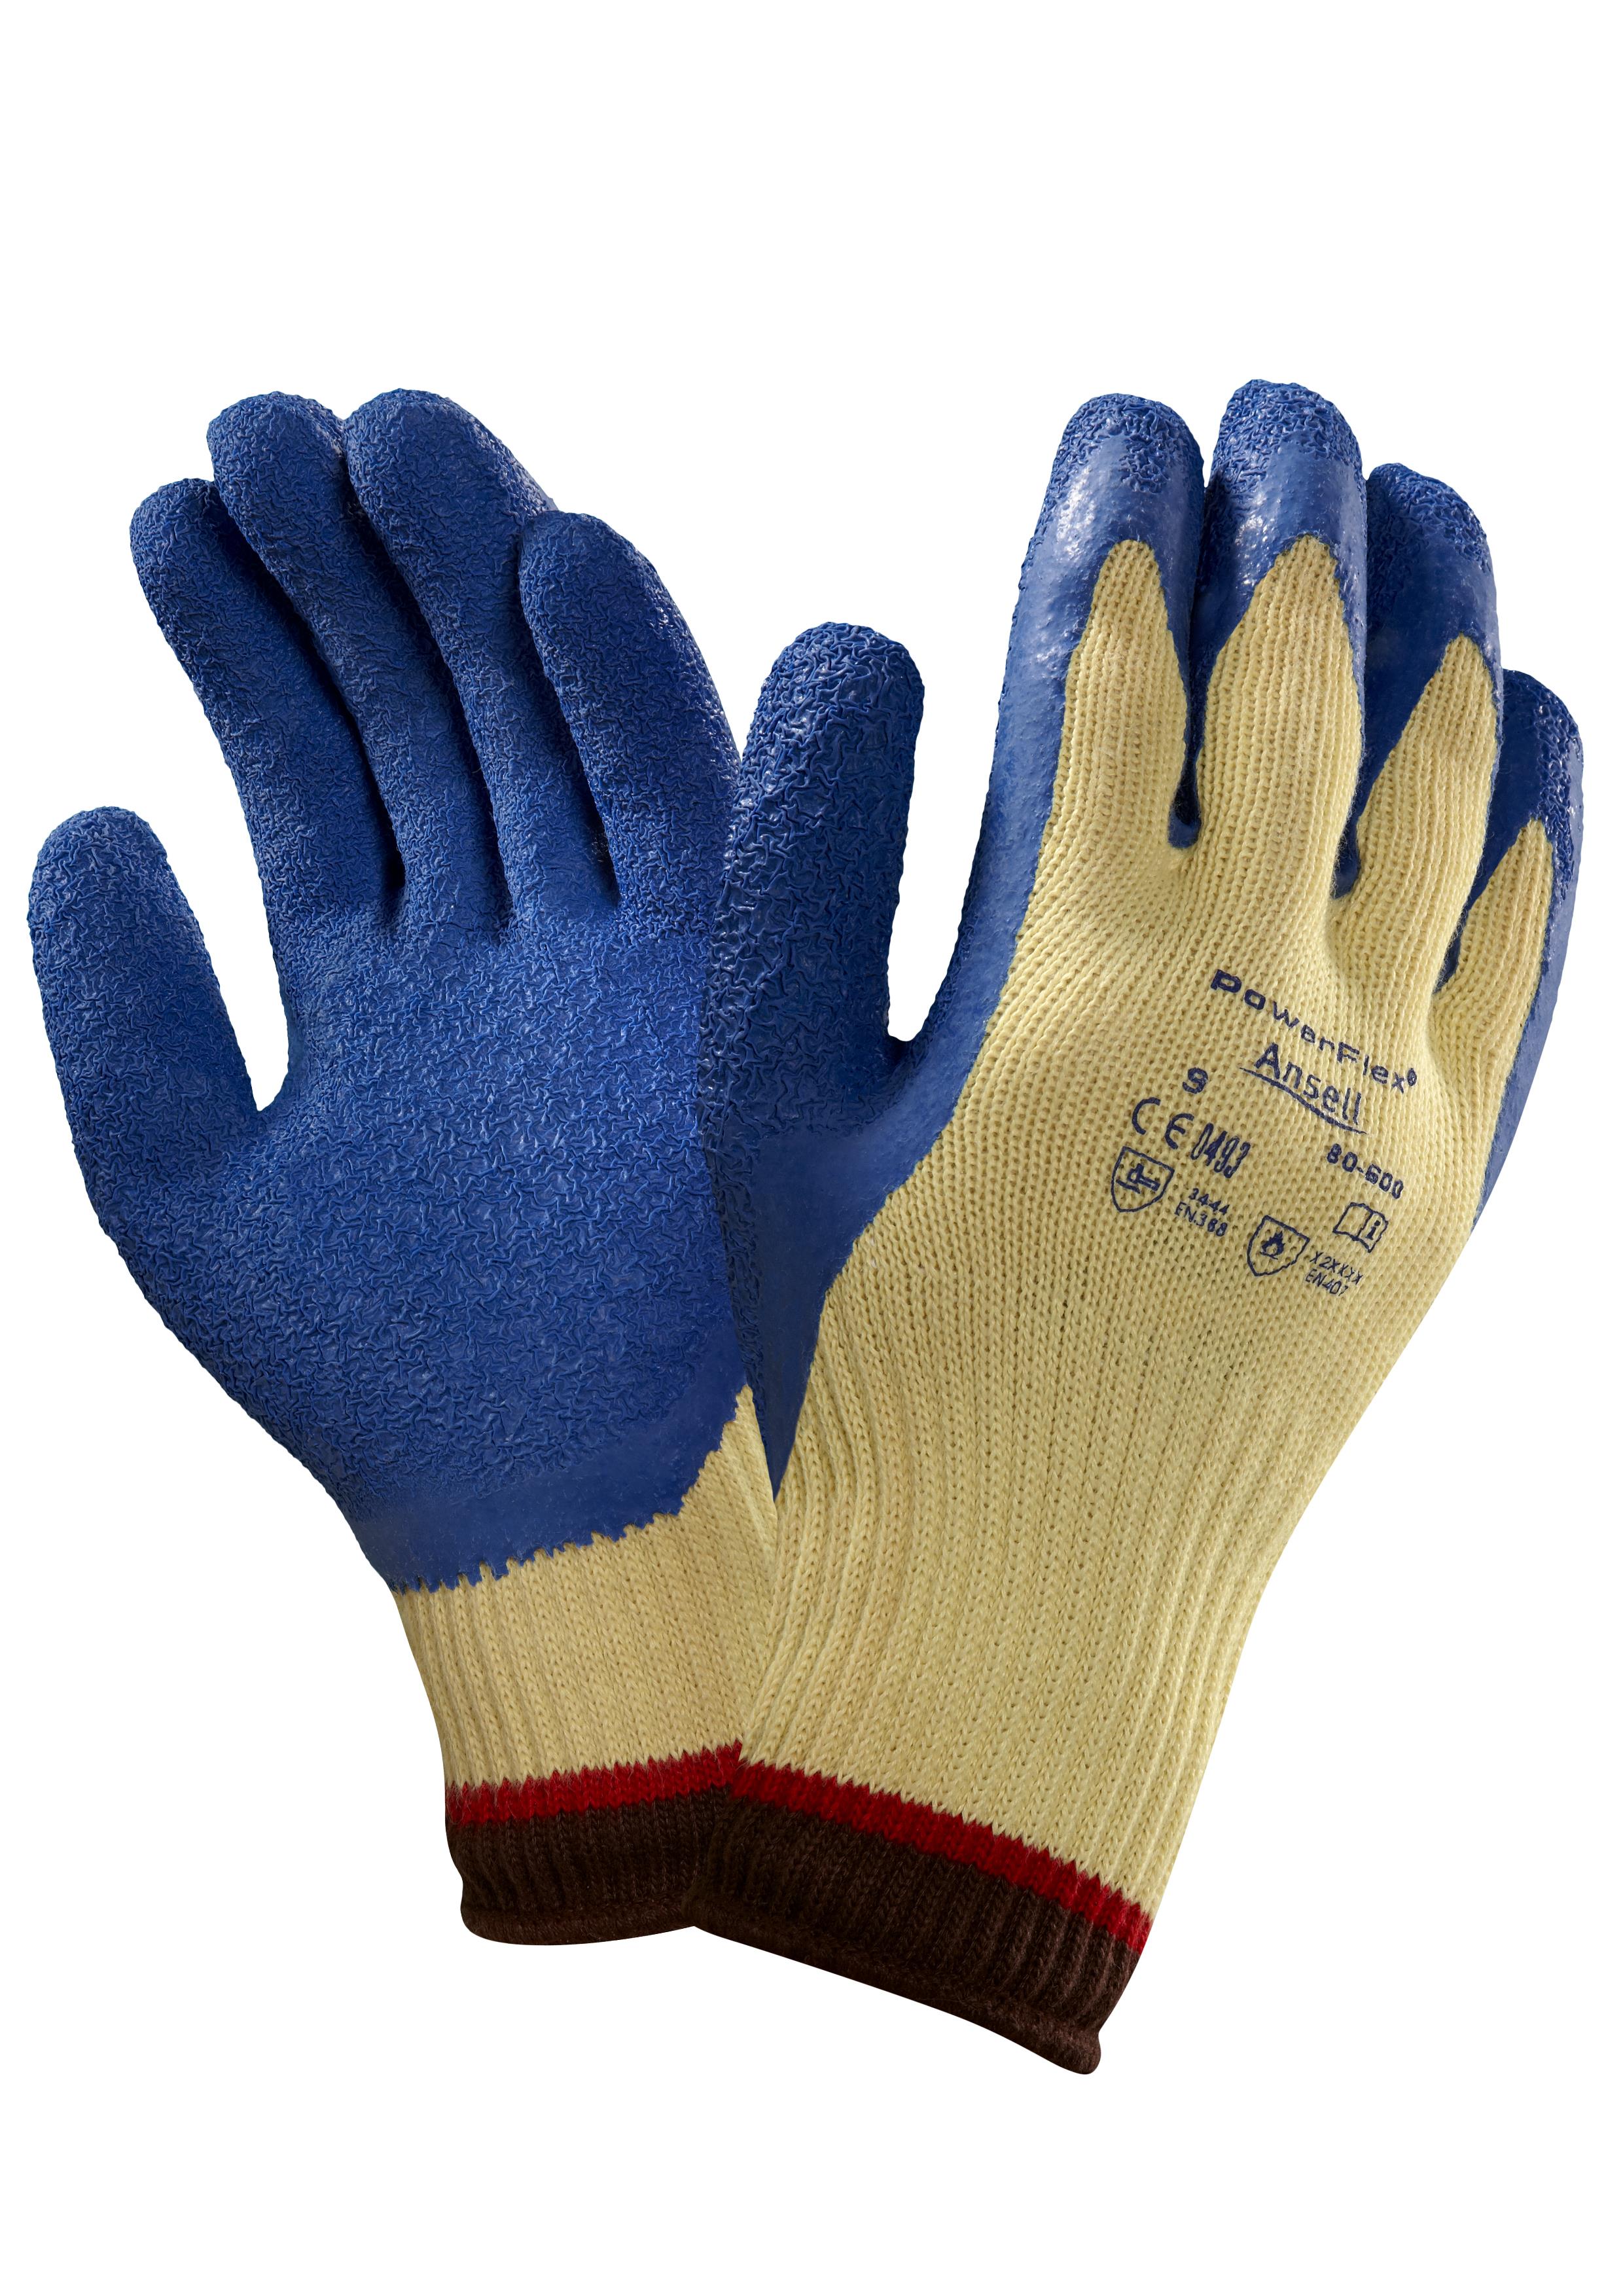 ANSELL POWERFLEX PLUS 80-600 - Cut Resistant Gloves